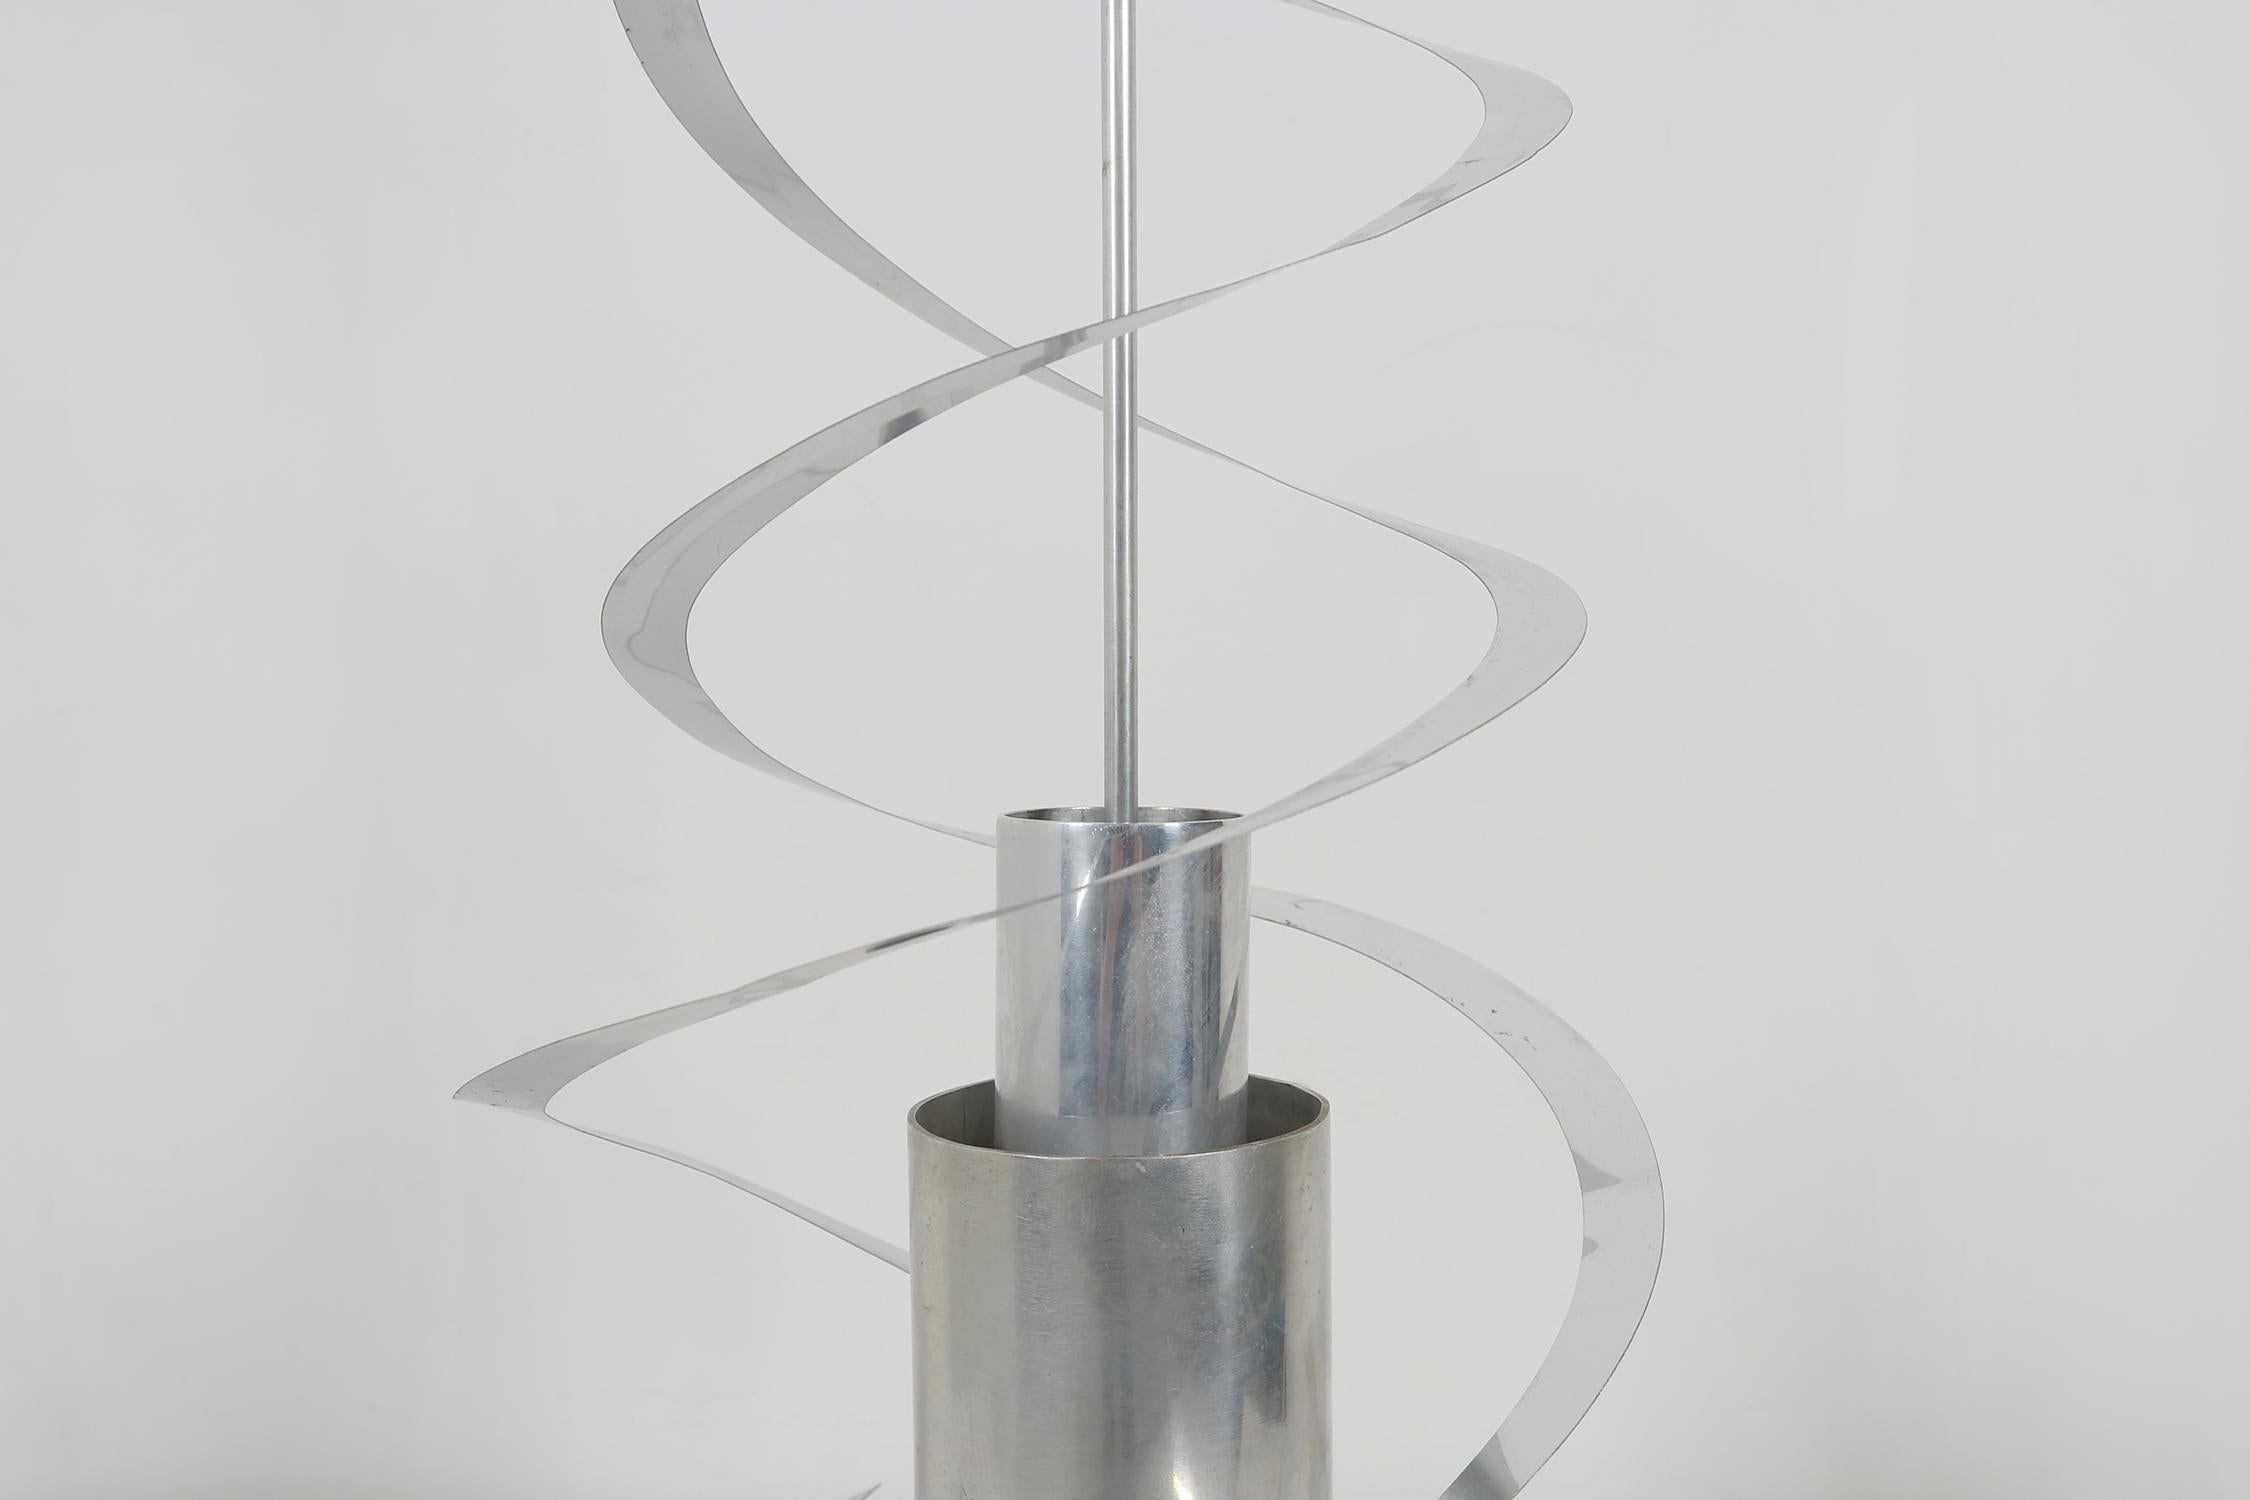 Aluminum Werner Epstein Kinetic Light Sculpture, 1972 For Sale